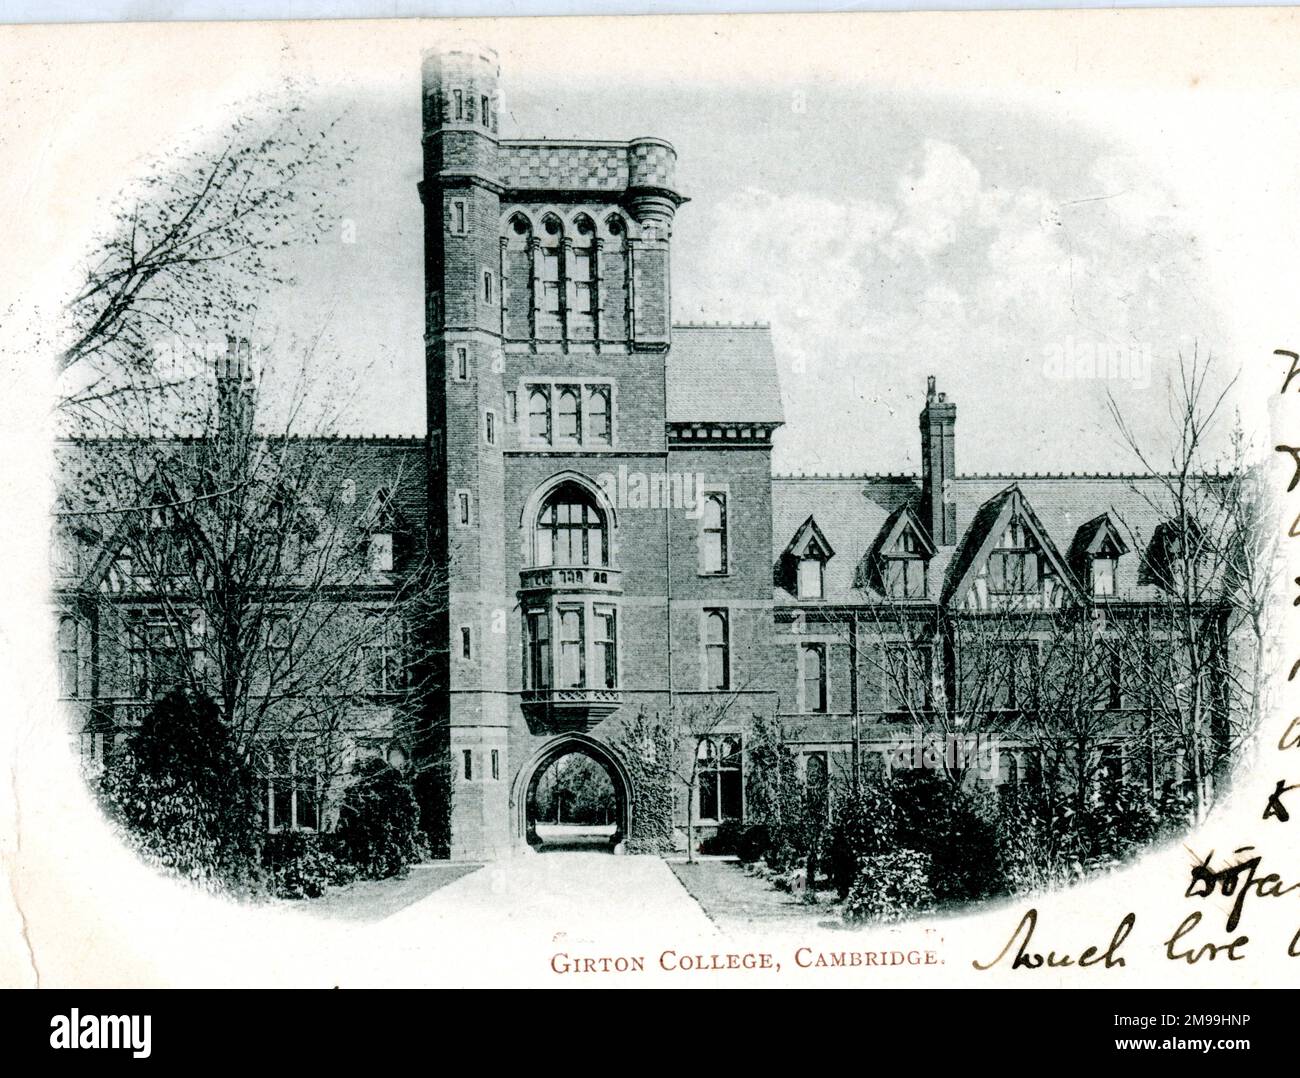 Girton College, Cambridge. Stock Photo